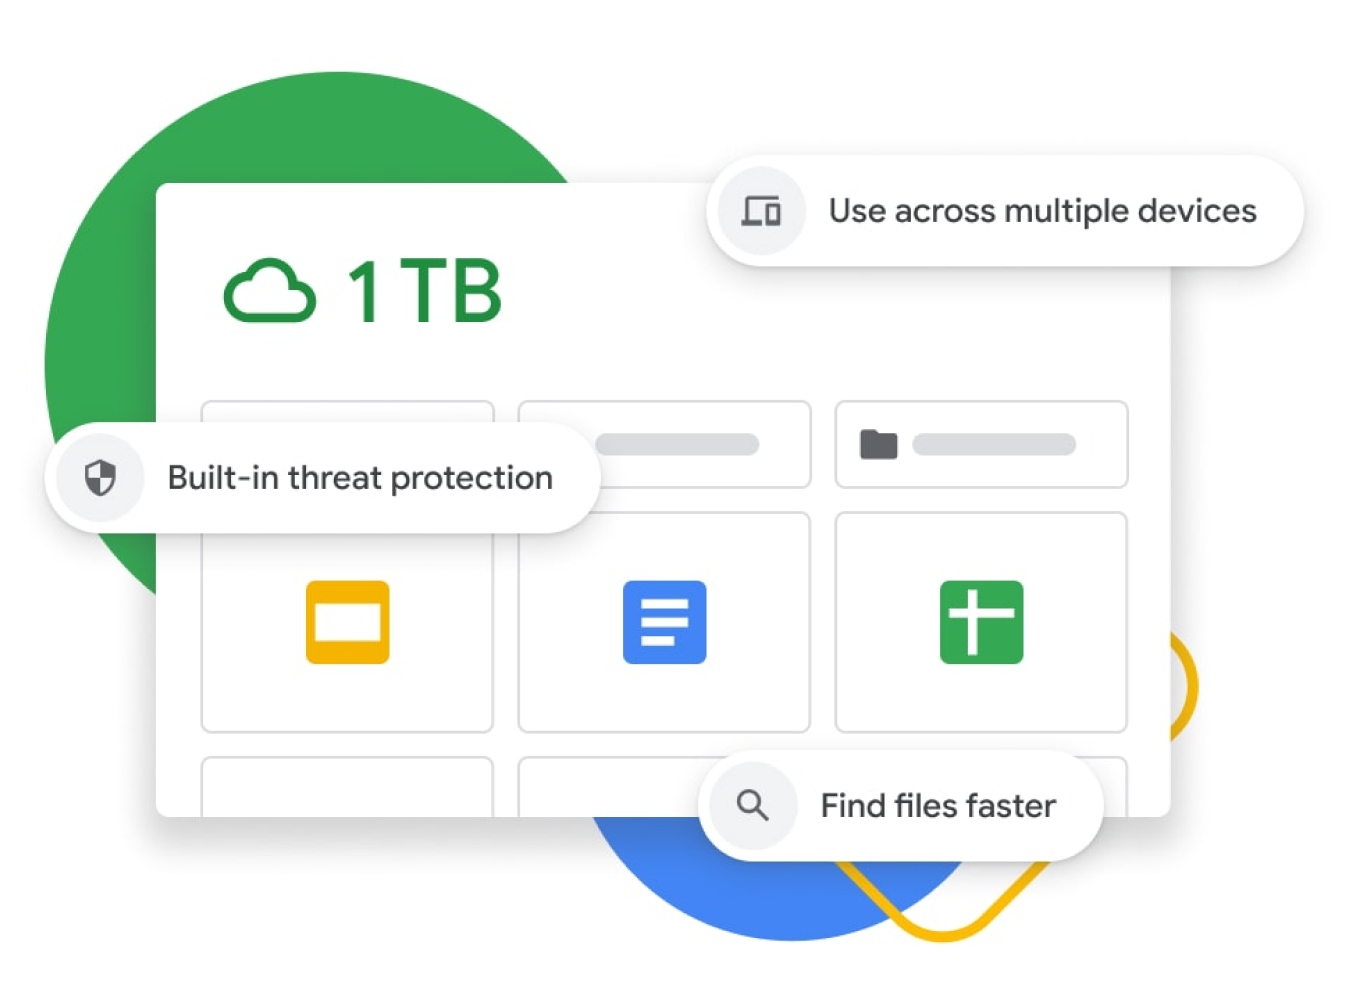 「Google 雲端硬碟」資訊主頁的圖像，顯示 1 TB 儲存空間、內置威脅防護、多裝置同步功能和加強搜尋功能。